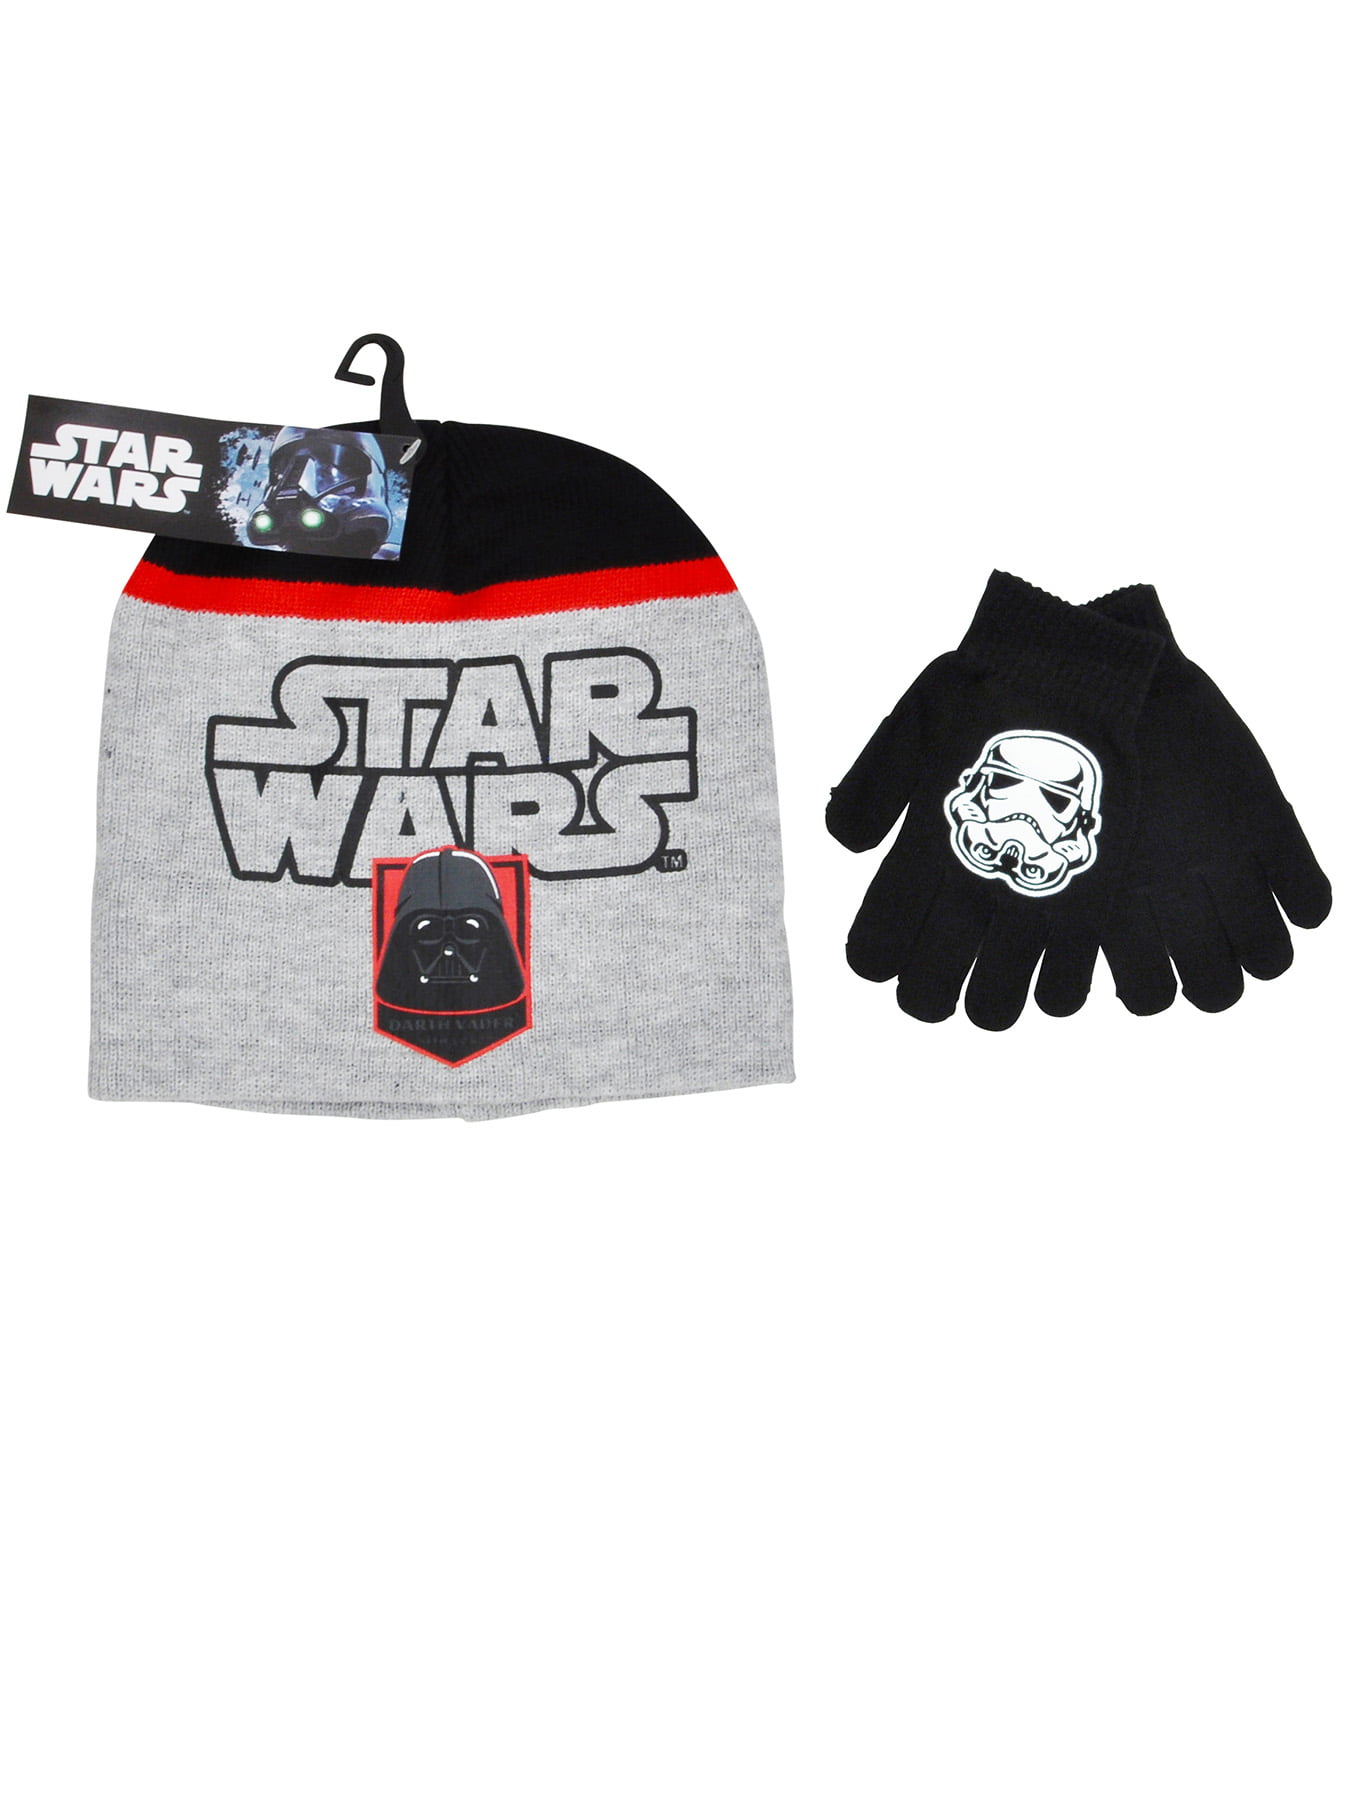 Star Wars Darth Vader Black Grey Knit Beanie Hat Stormtrooper Black Gloves Set